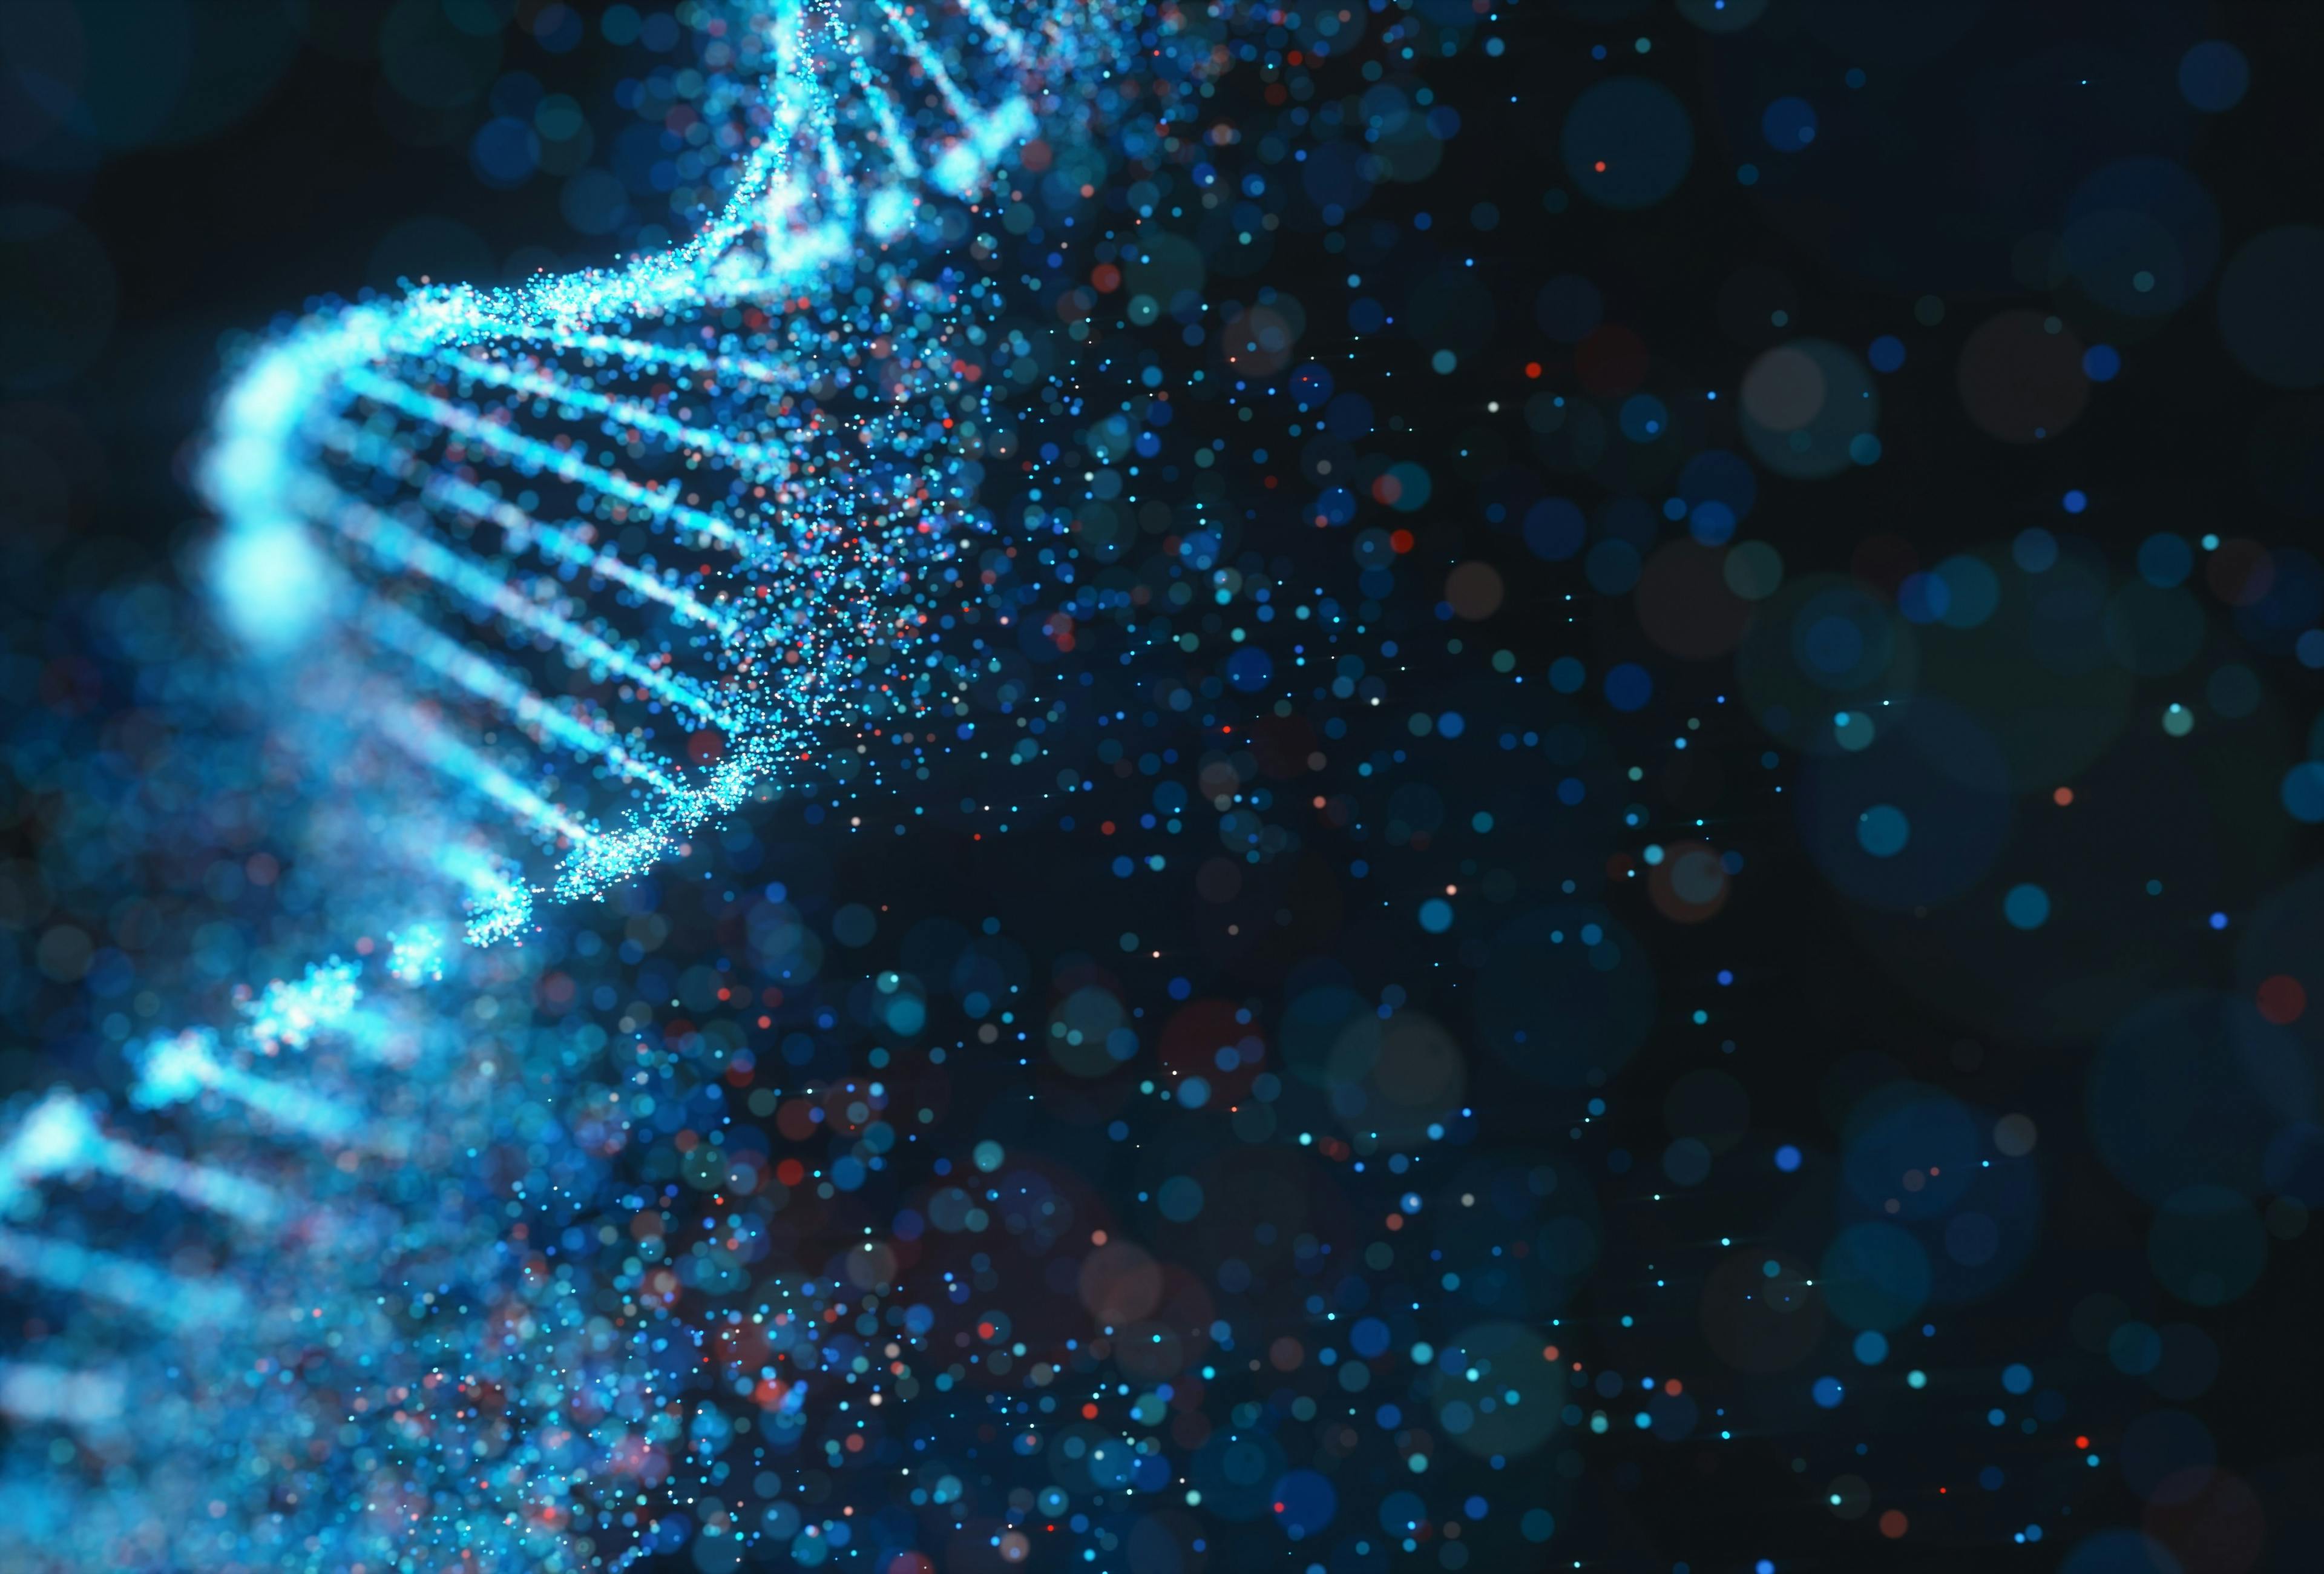 Colored Genetic Code DNA Molecule Structure | Image Credit: © ktsdesign - www.stock.adobe.com